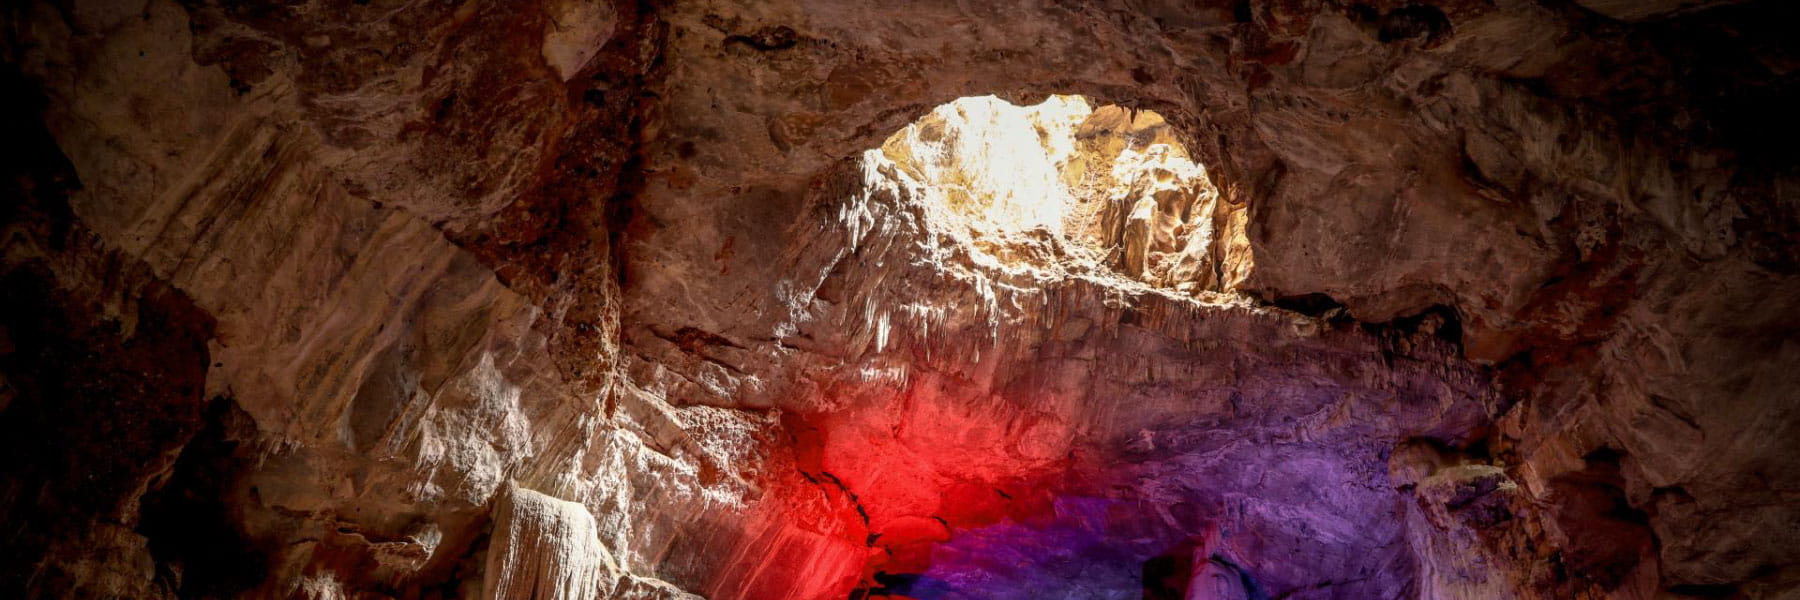 Borra caves in Vishakapatnam, Andhra Pradesh